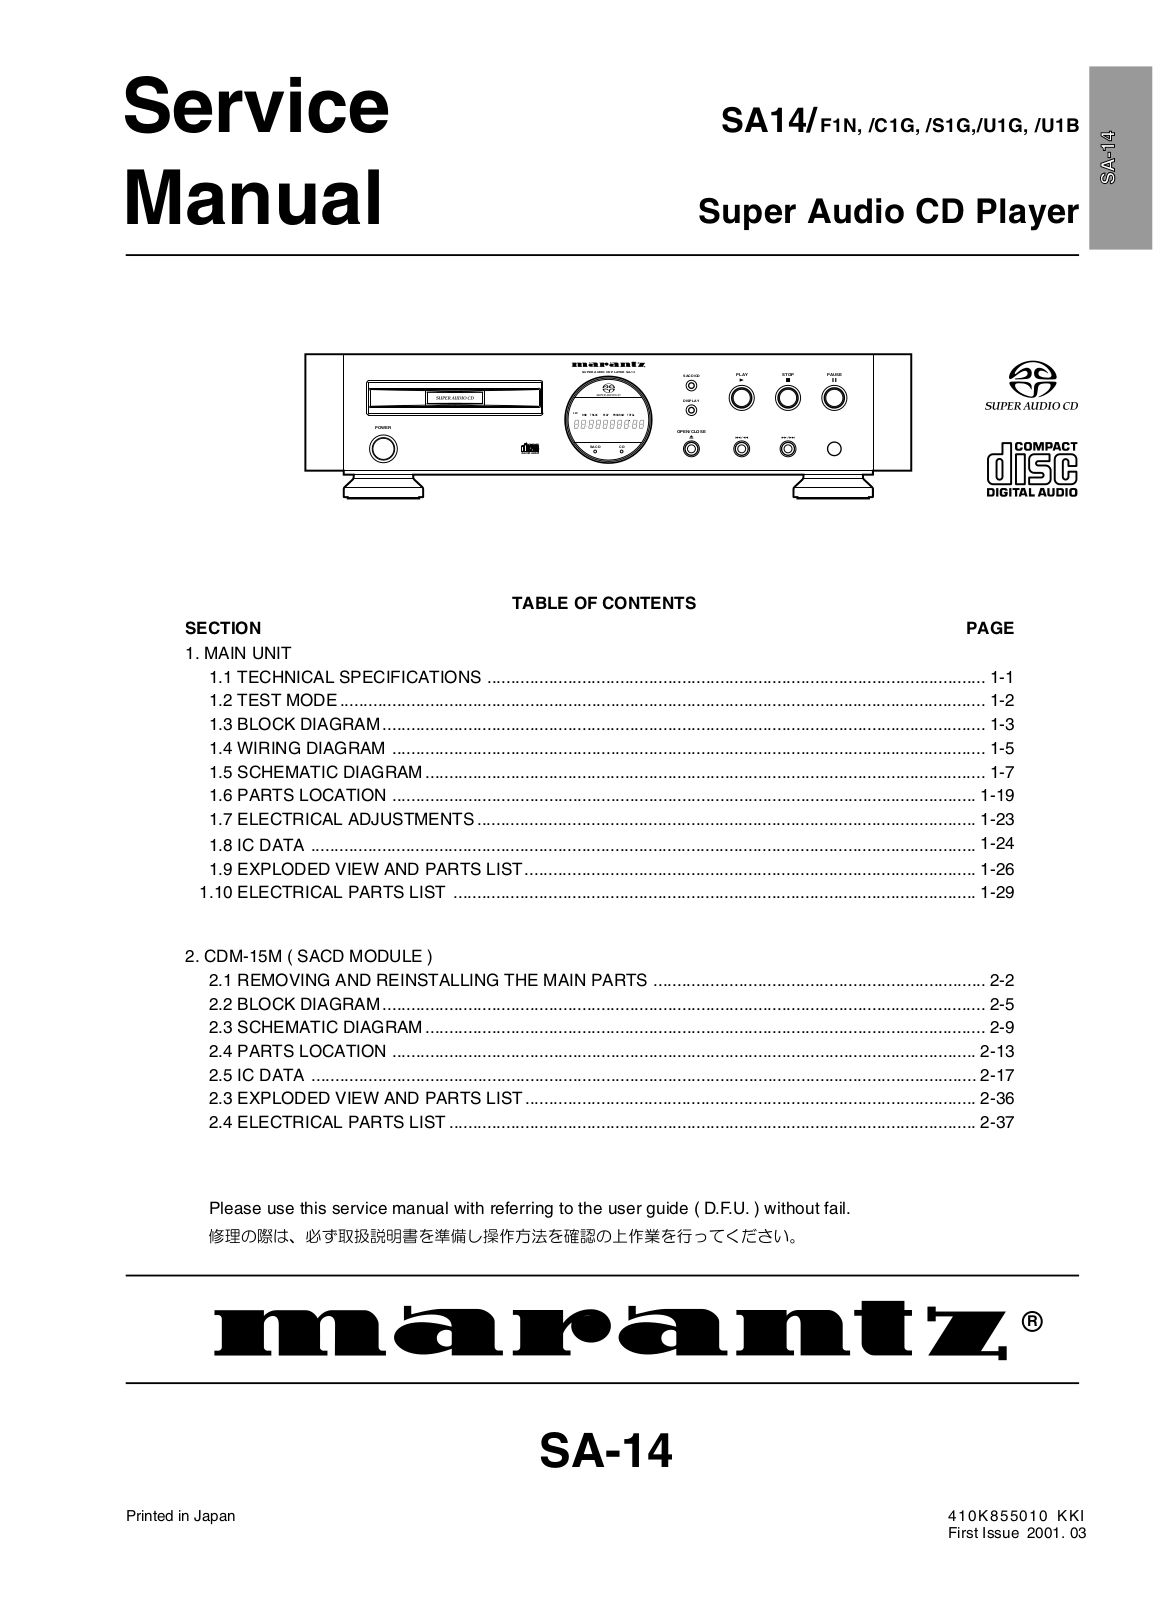 Marantz SA-14 Service Manual